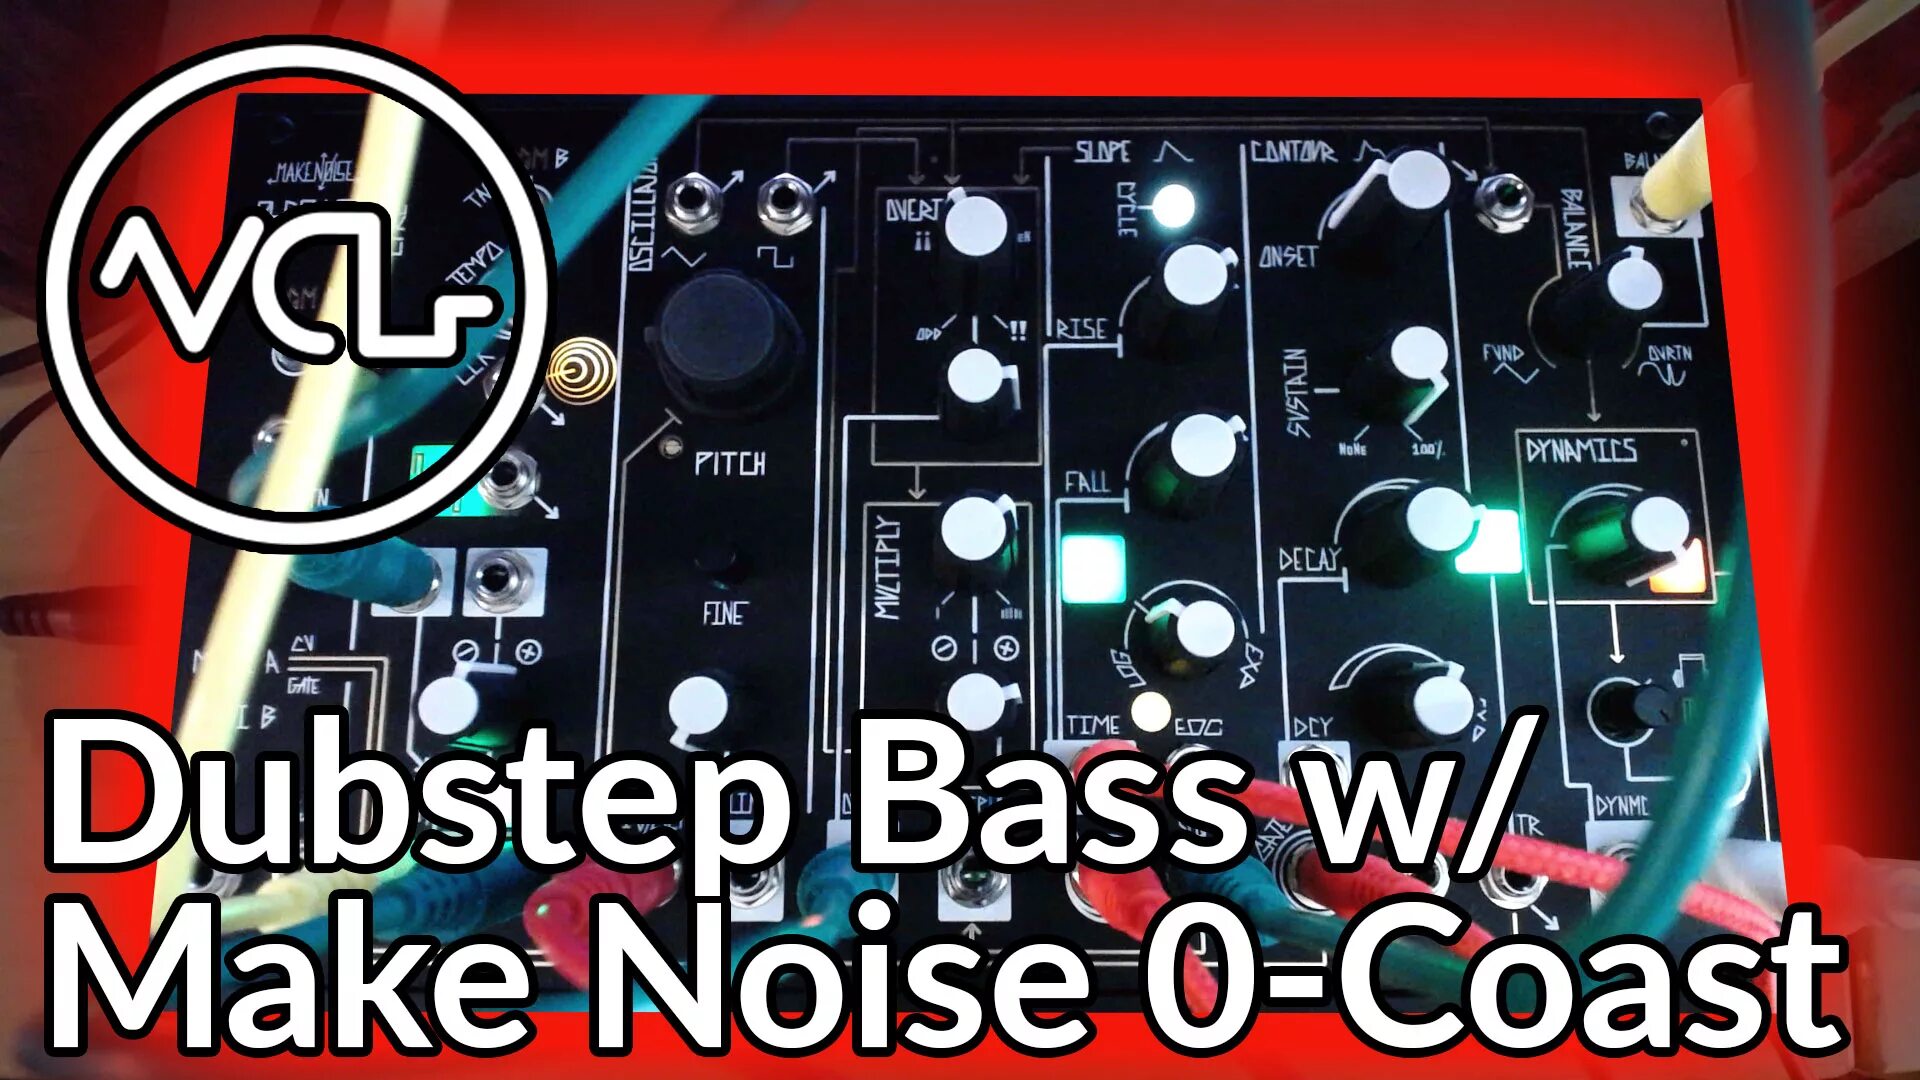 Dubstep bass. Make Noise 0-Coast. 0 Coast make Noise Patches. Make Noise Synth.